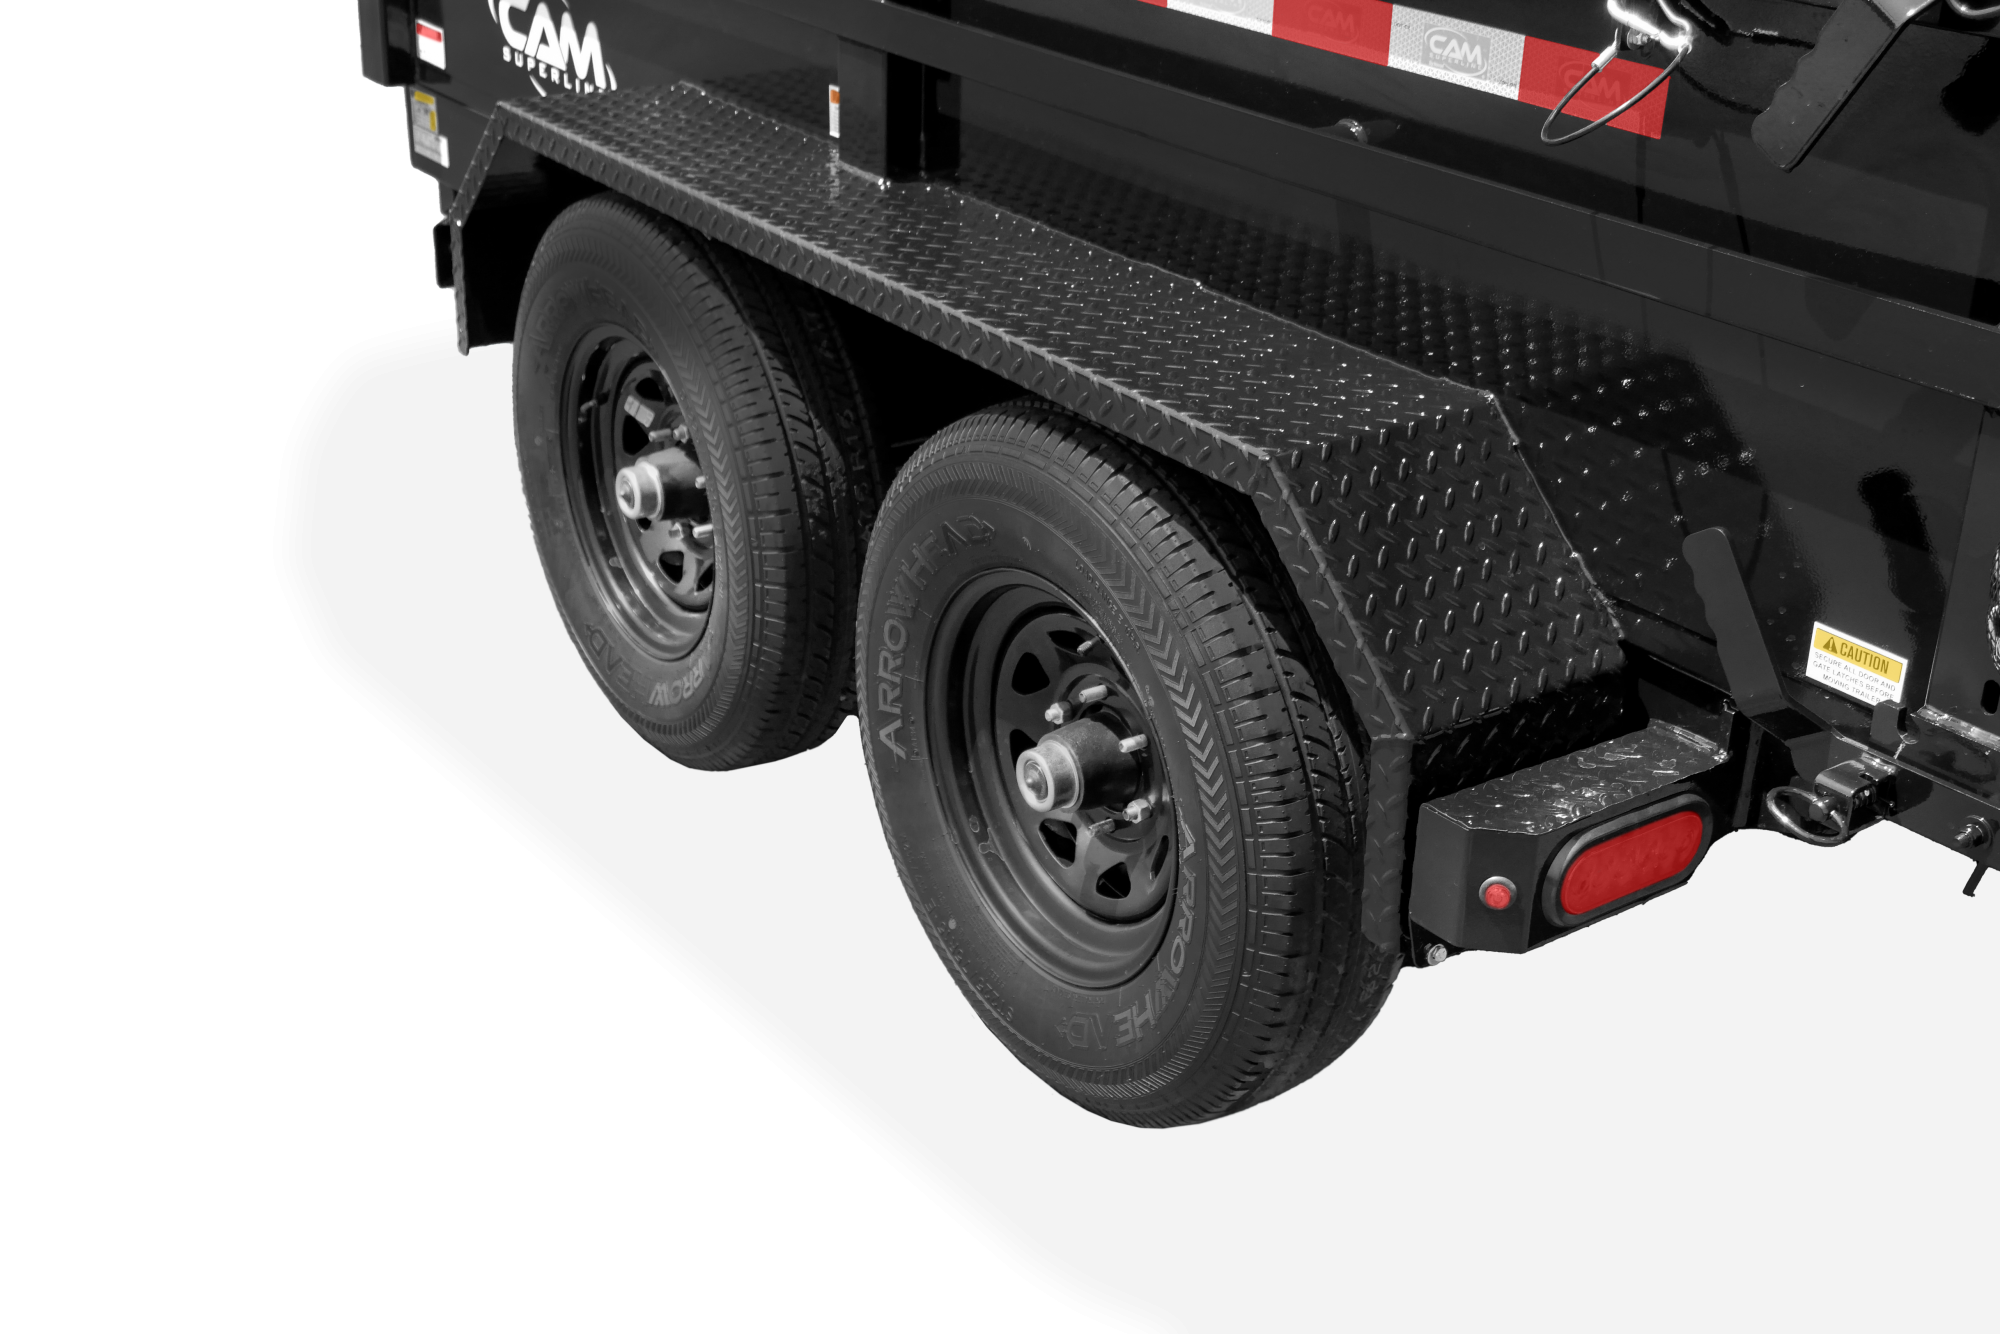 Cam Superline | Standard Duty Low Profile Dump Trailer | Image | Left side of black Standard Duty Low Profile Dump Trailer with reflective tape, close-up of wheels